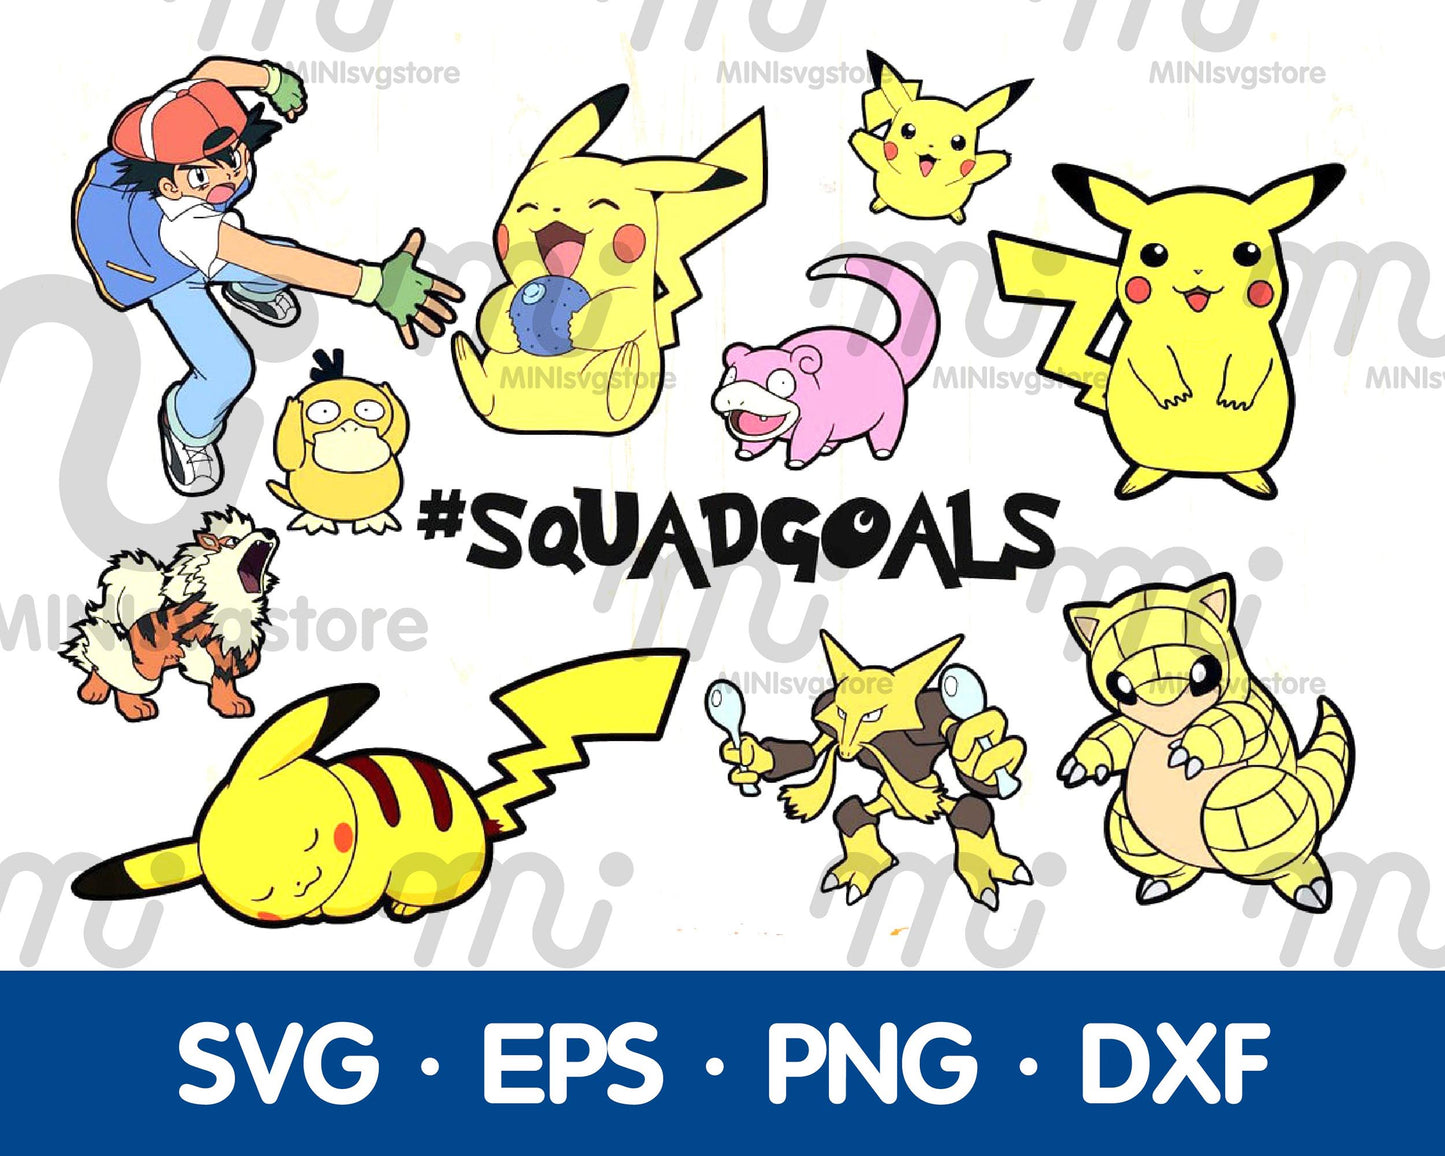 100+ file pokemon SVG Mega Bundle  svg eps png, for Cricut, Silhouette, digital, file cut